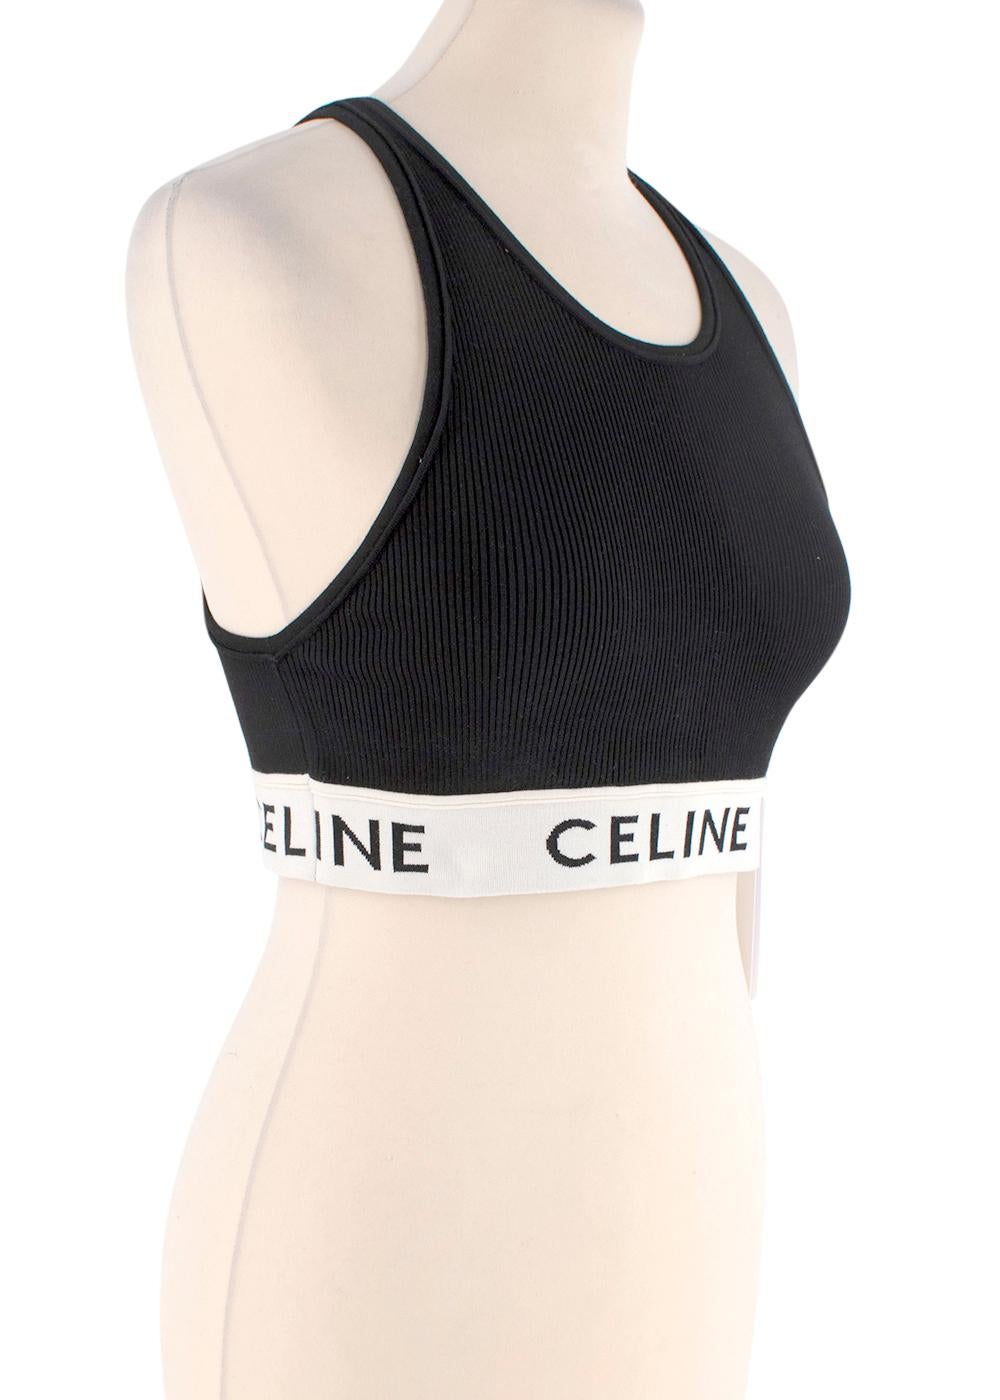 Celine Athletic Cotton Knit Black Sports Bra - Size M Sold Out - Us size 8 For Sale 2